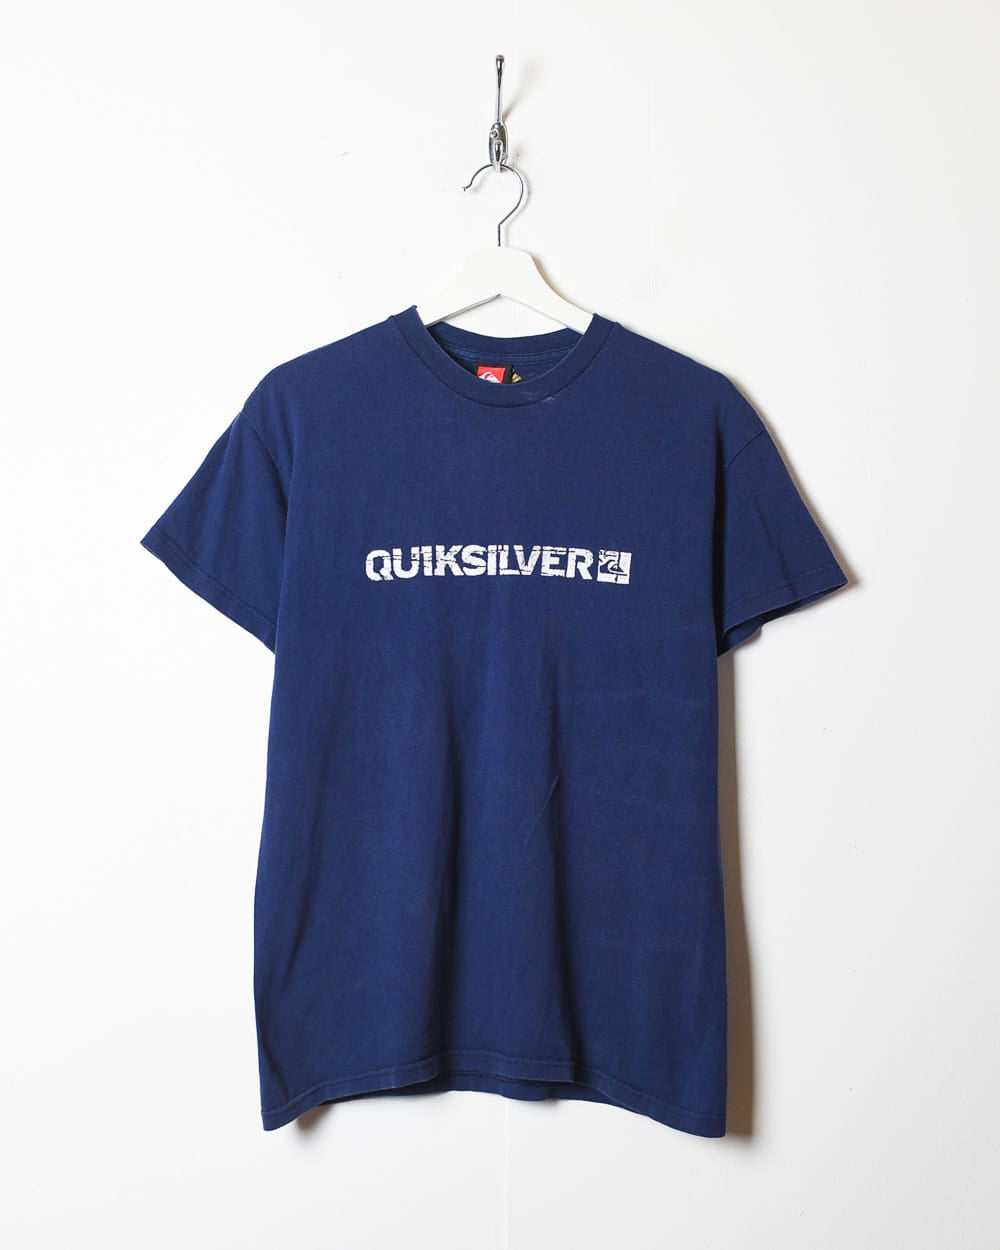 Navy Quiksilver T-Shirt - Medium